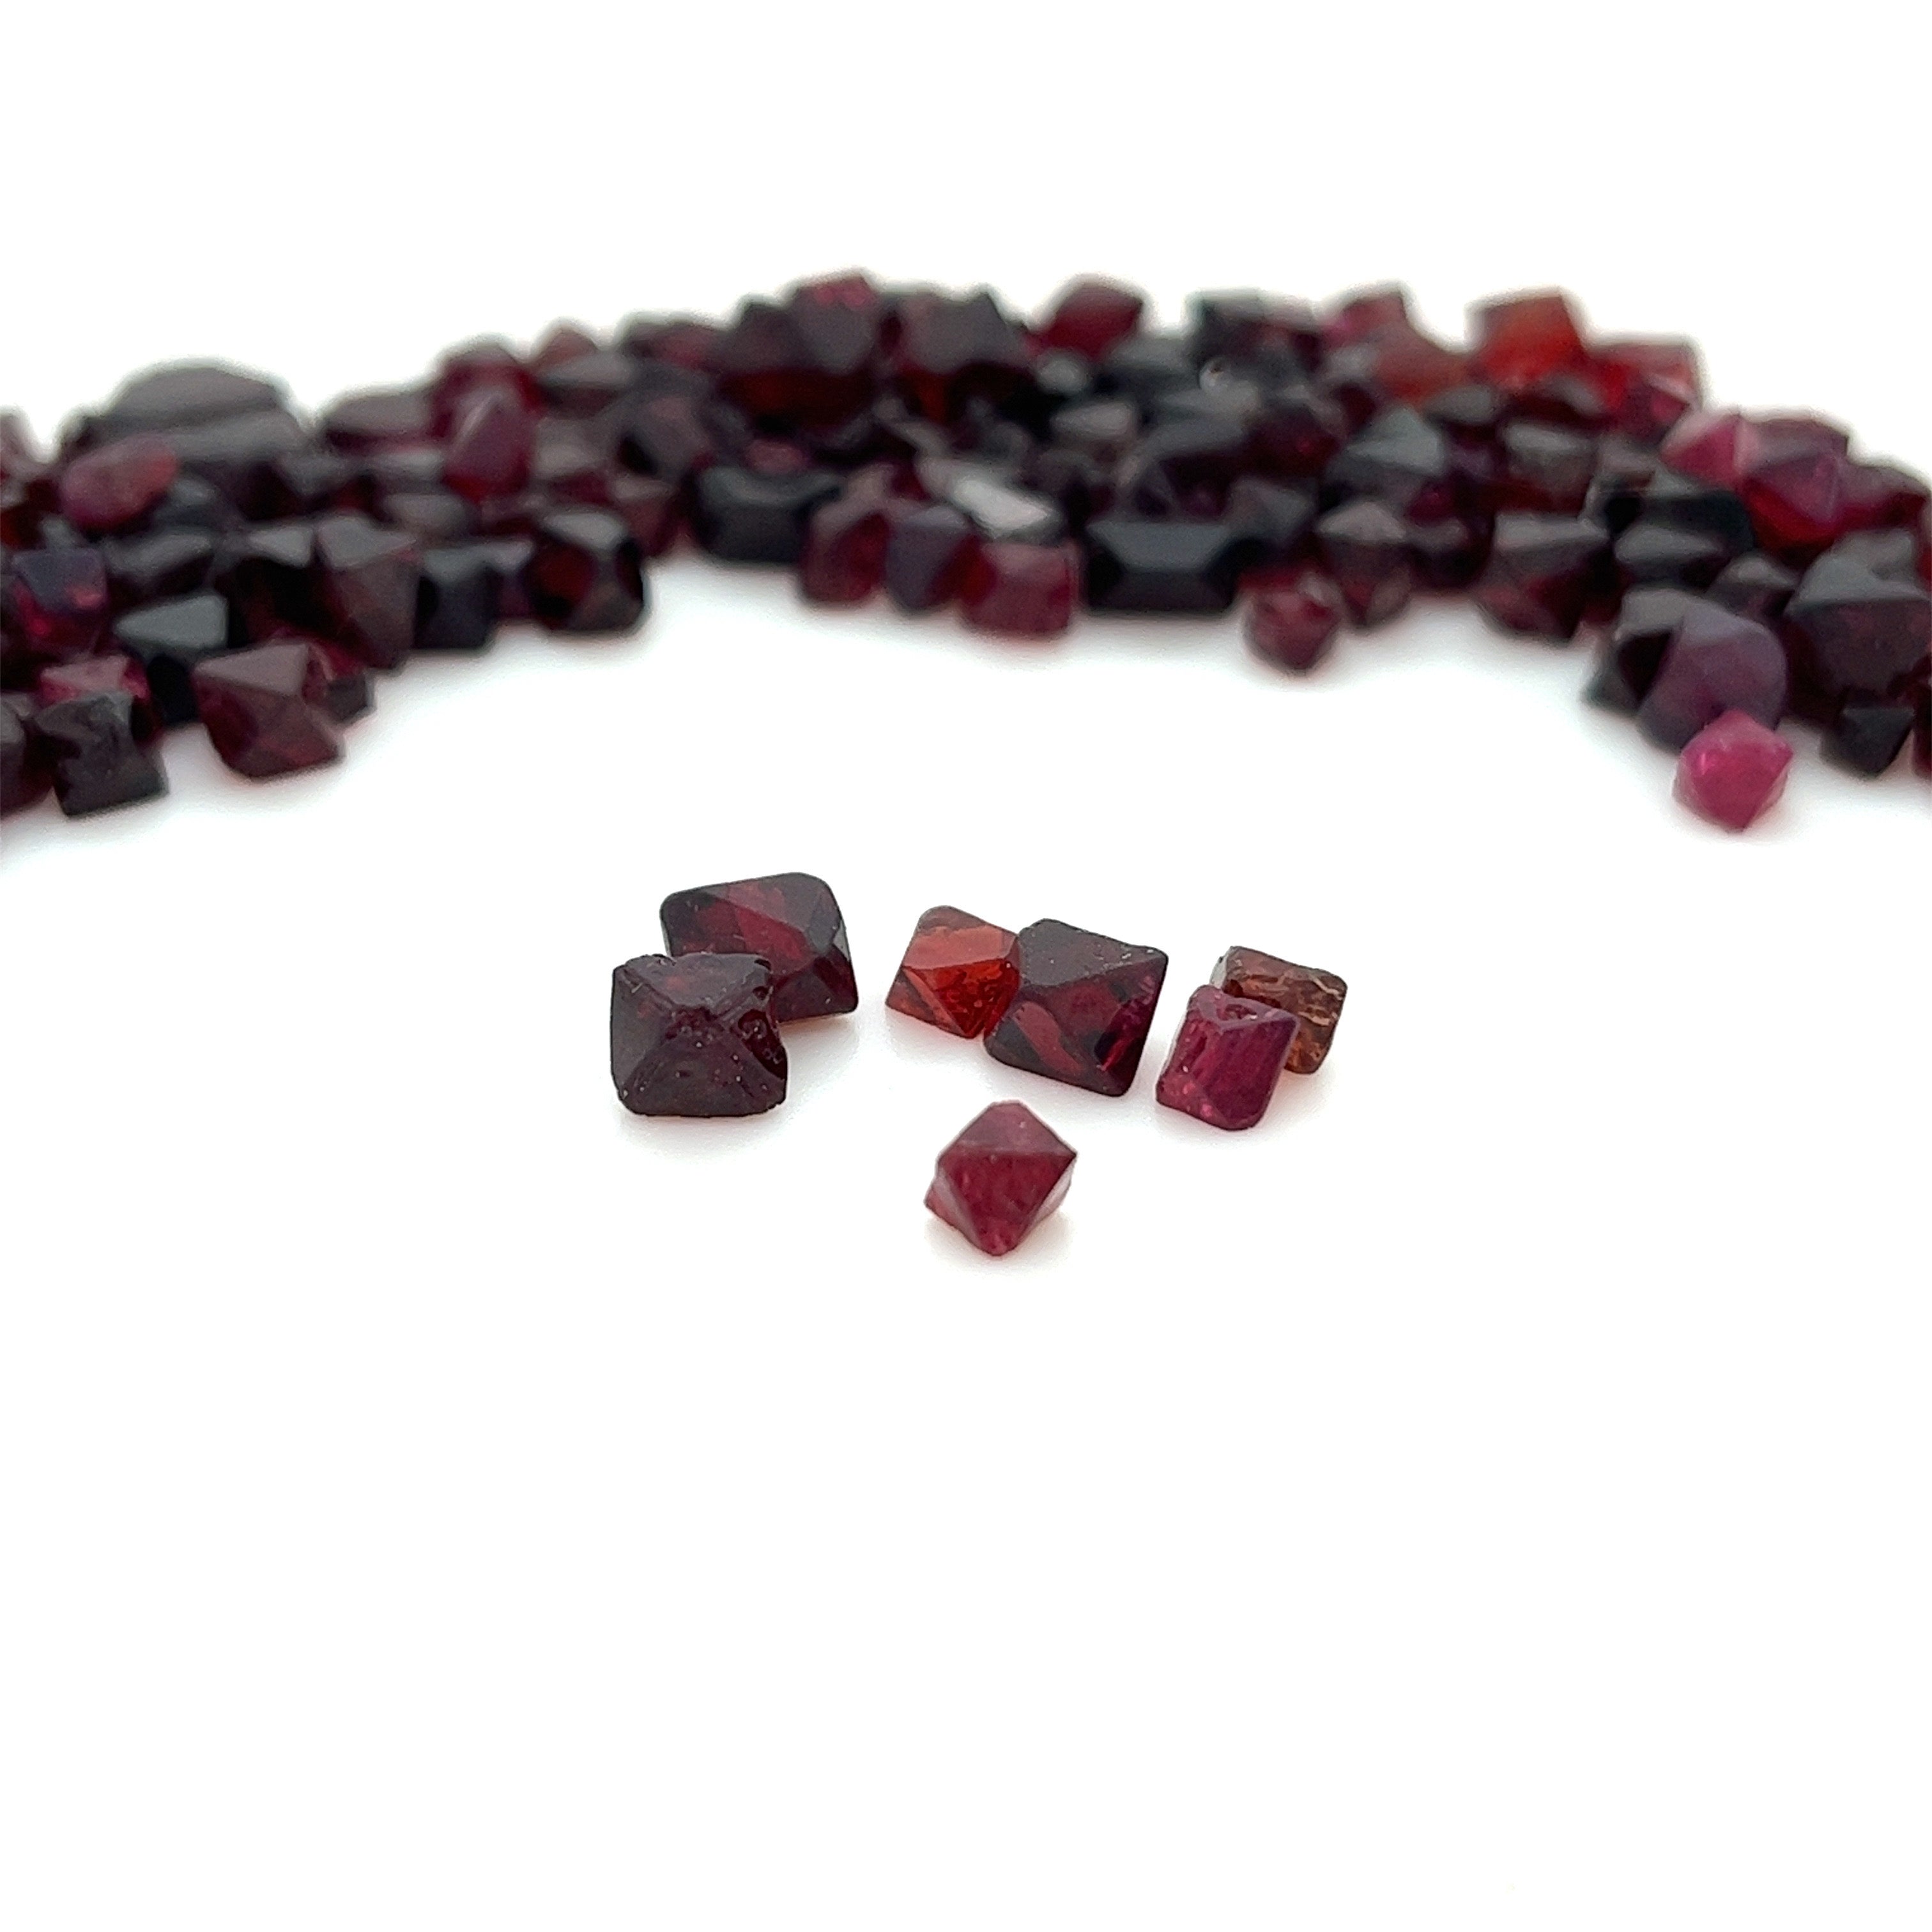 Red Spinel Gemstone; Natural Untreated Burma Spinel Octohedrons, Rough Spinel Crystals, 5ct lot - Mark Oliver Gems